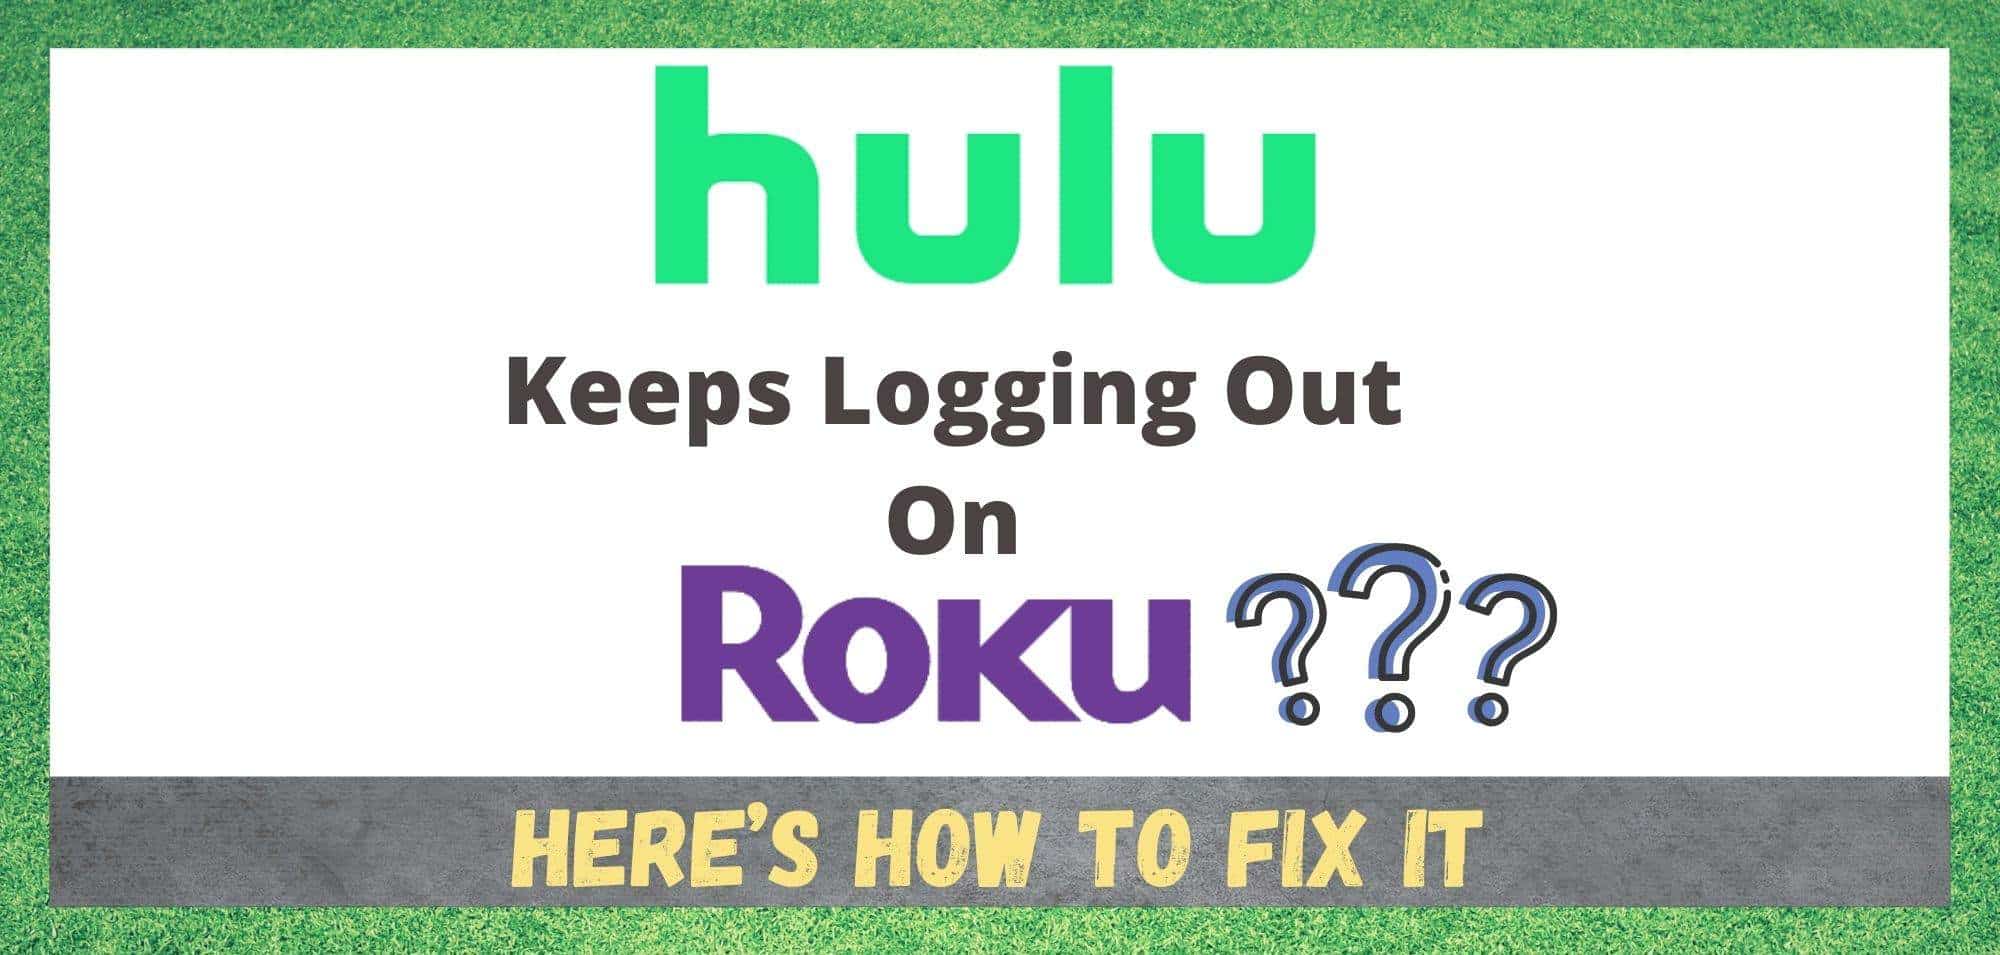 Hulu Keeps Logging Out On Roku